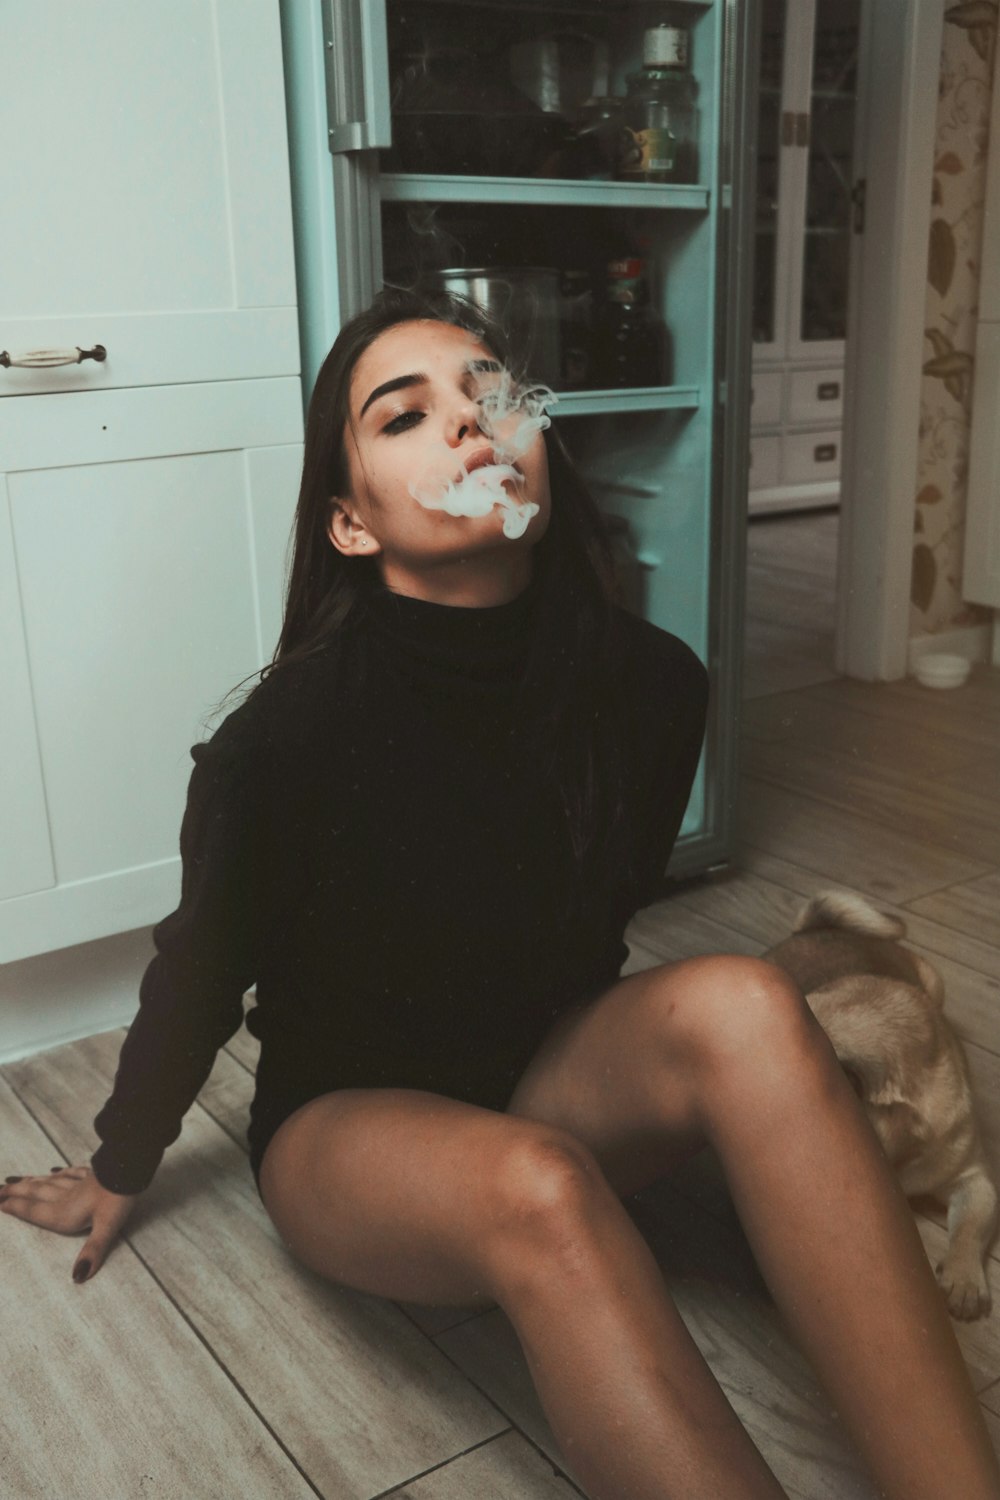 woman sitting on floor while smoking